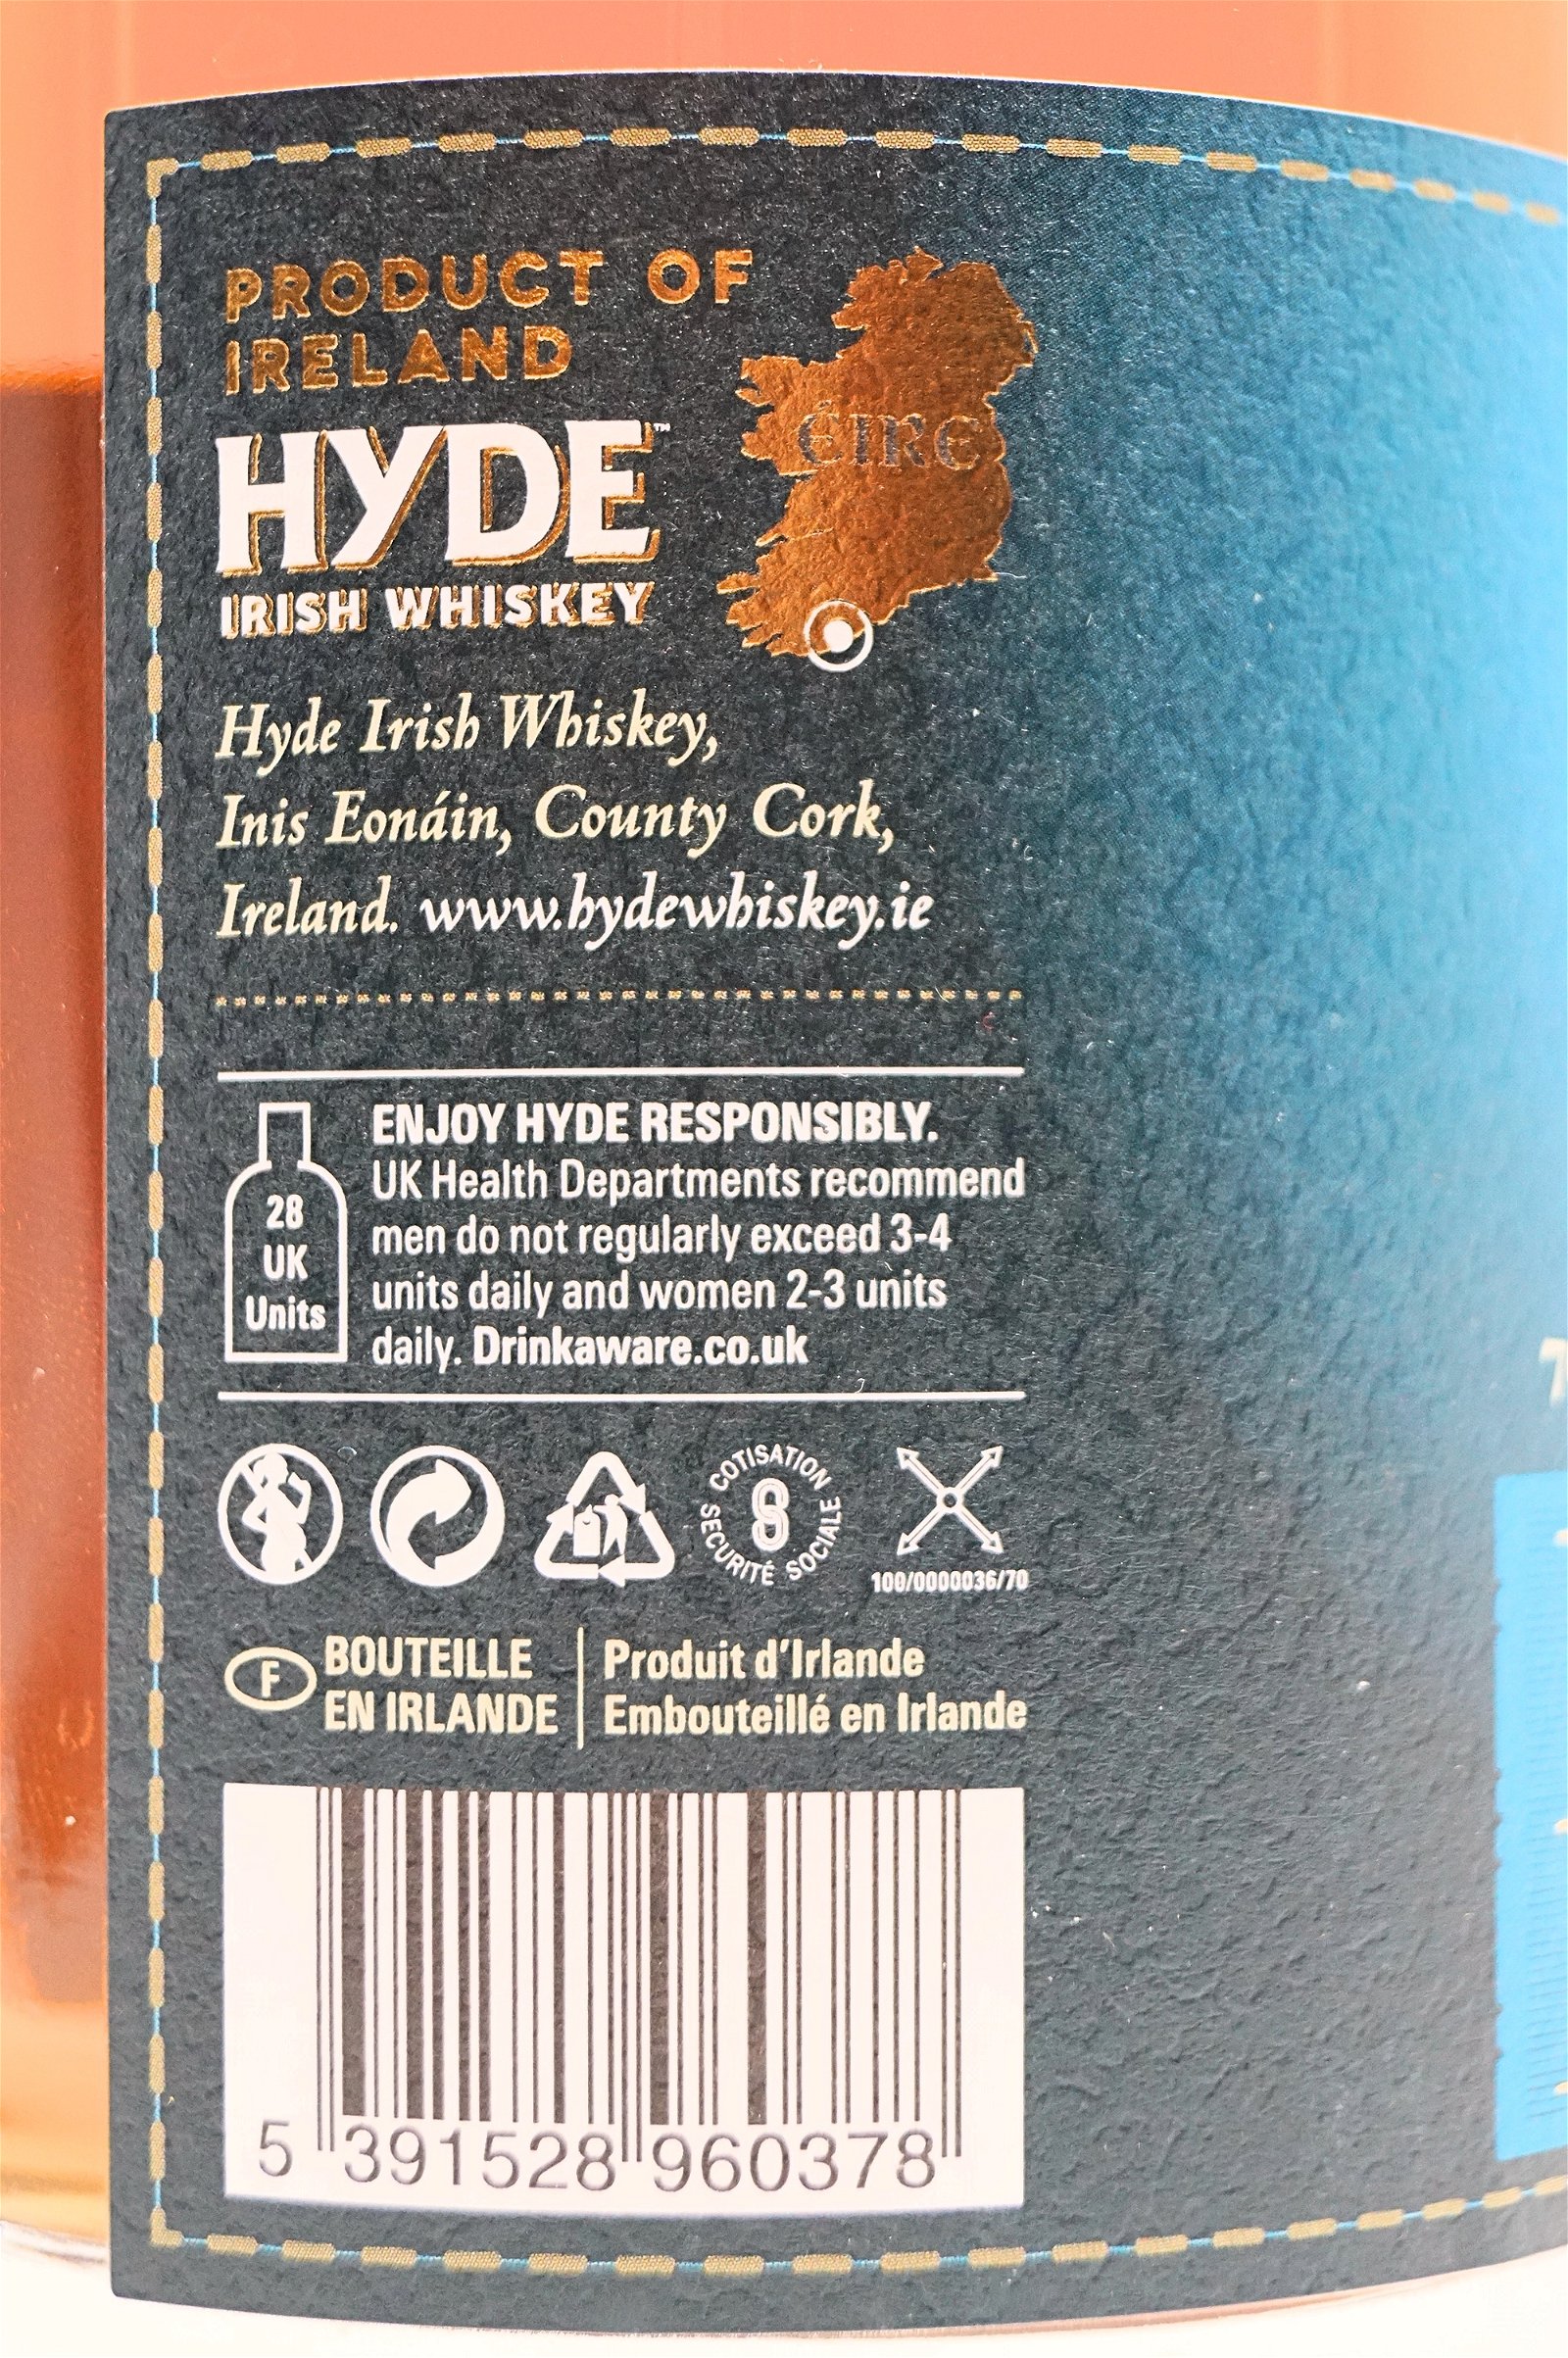 Hyde No. 7 Sherry Cask Limited Edition Single Malt Irish Whiskey